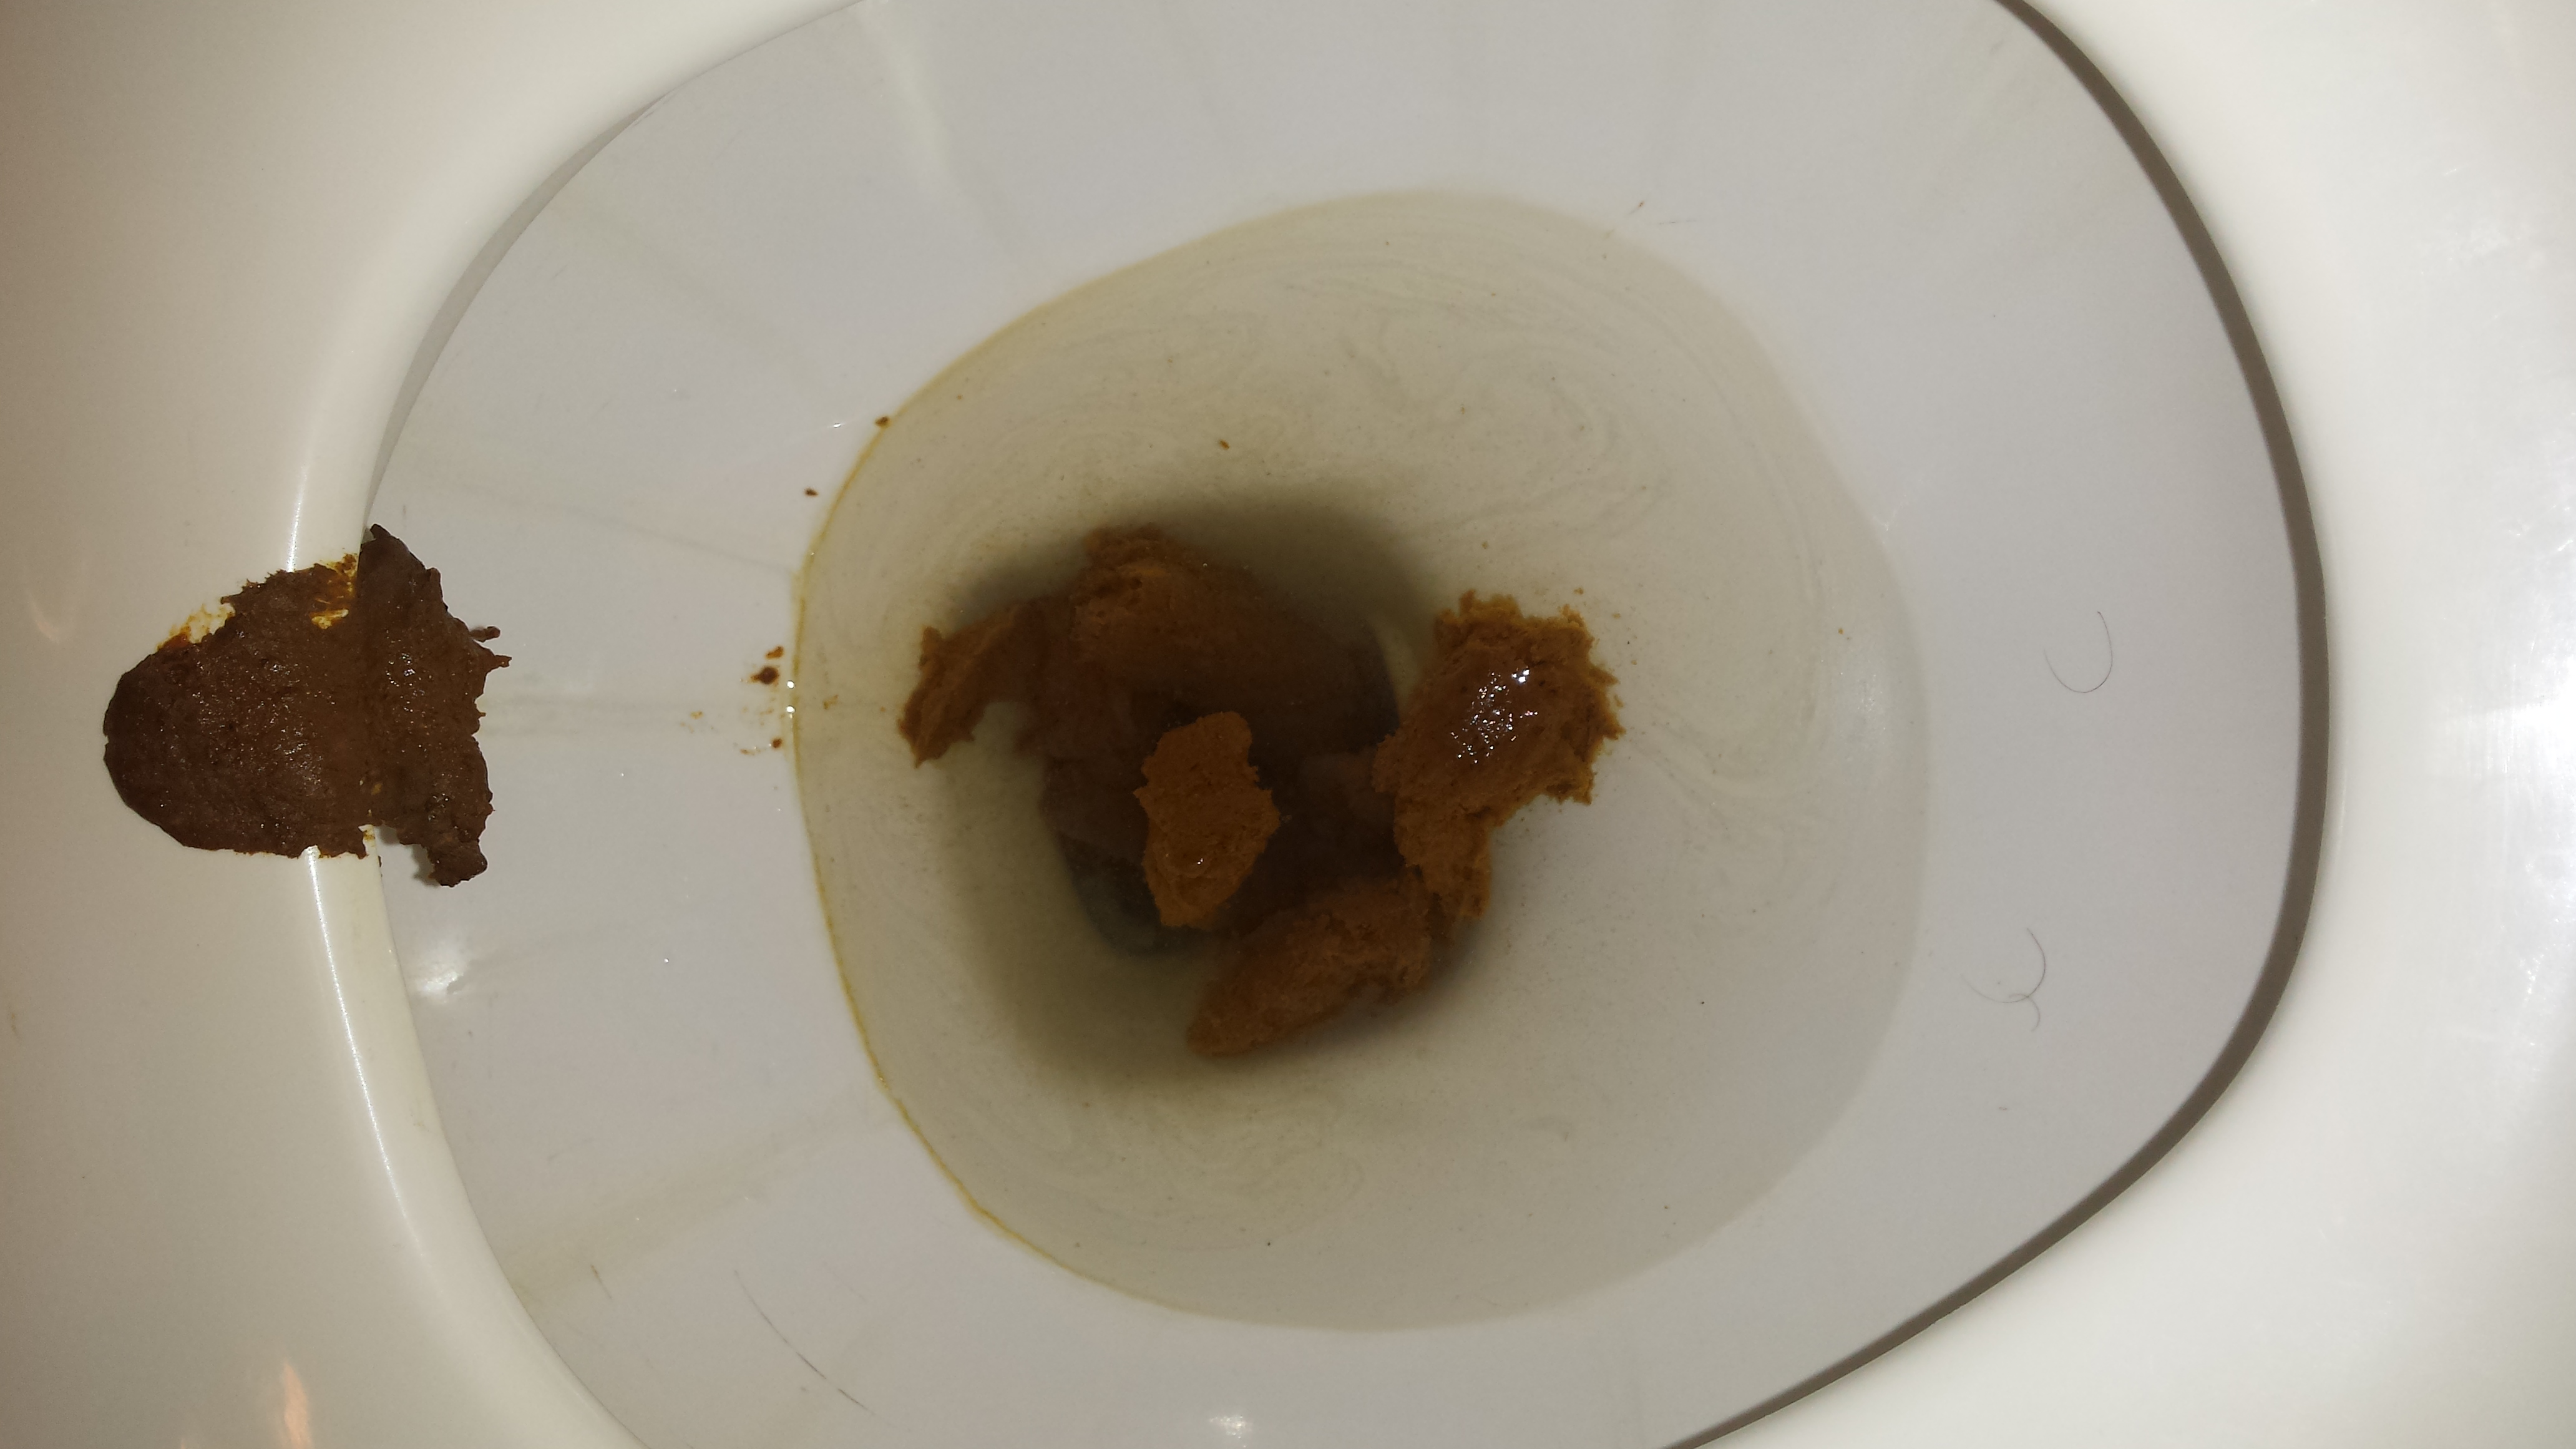 Poop #1 tonight